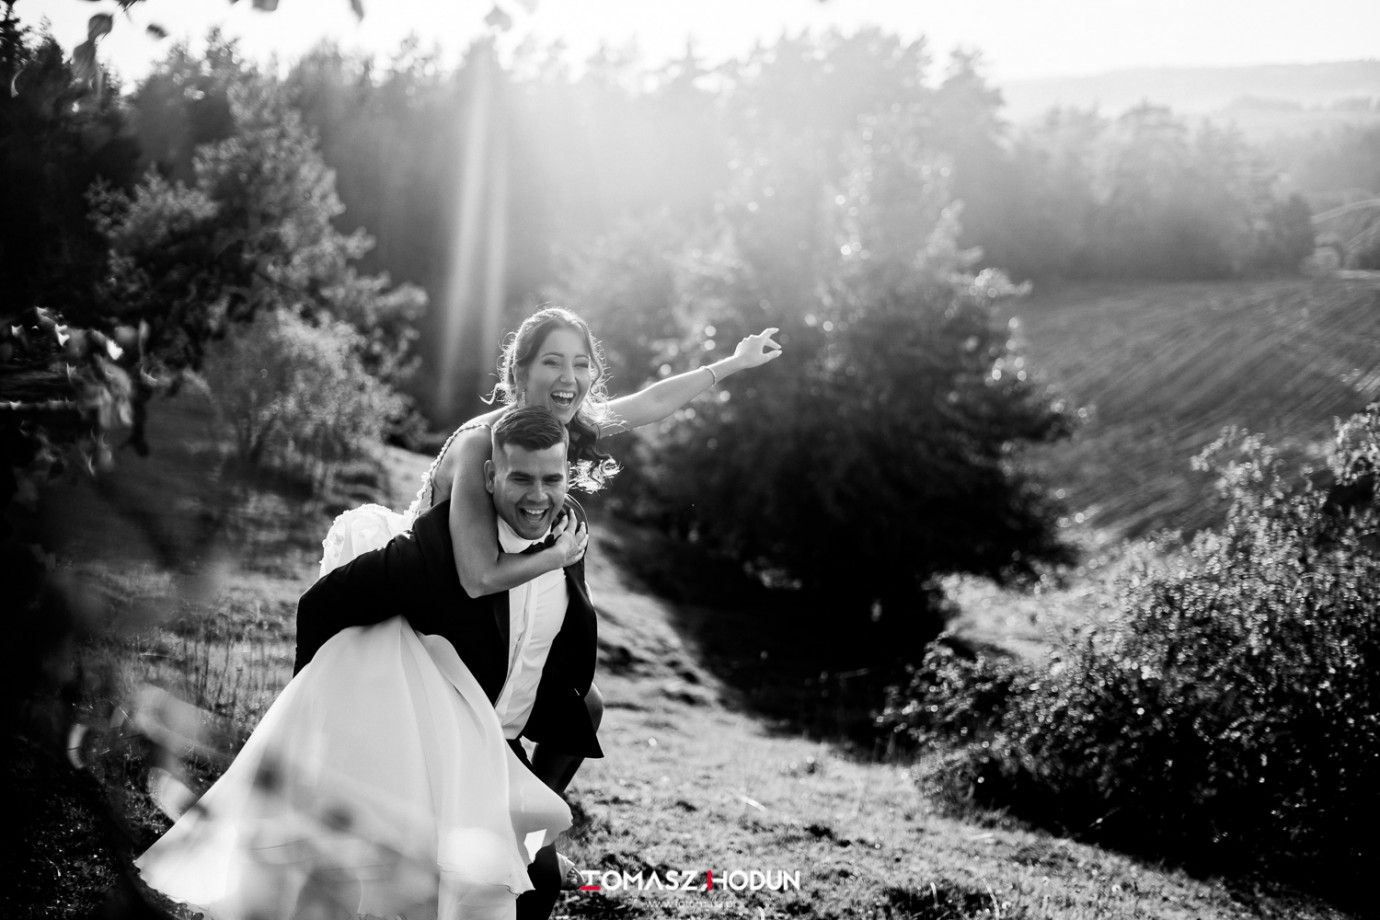 fotograf suwalki tomasz-hodun portfolio zdjecia slubne inspiracje wesele plener slubny sesja slubna